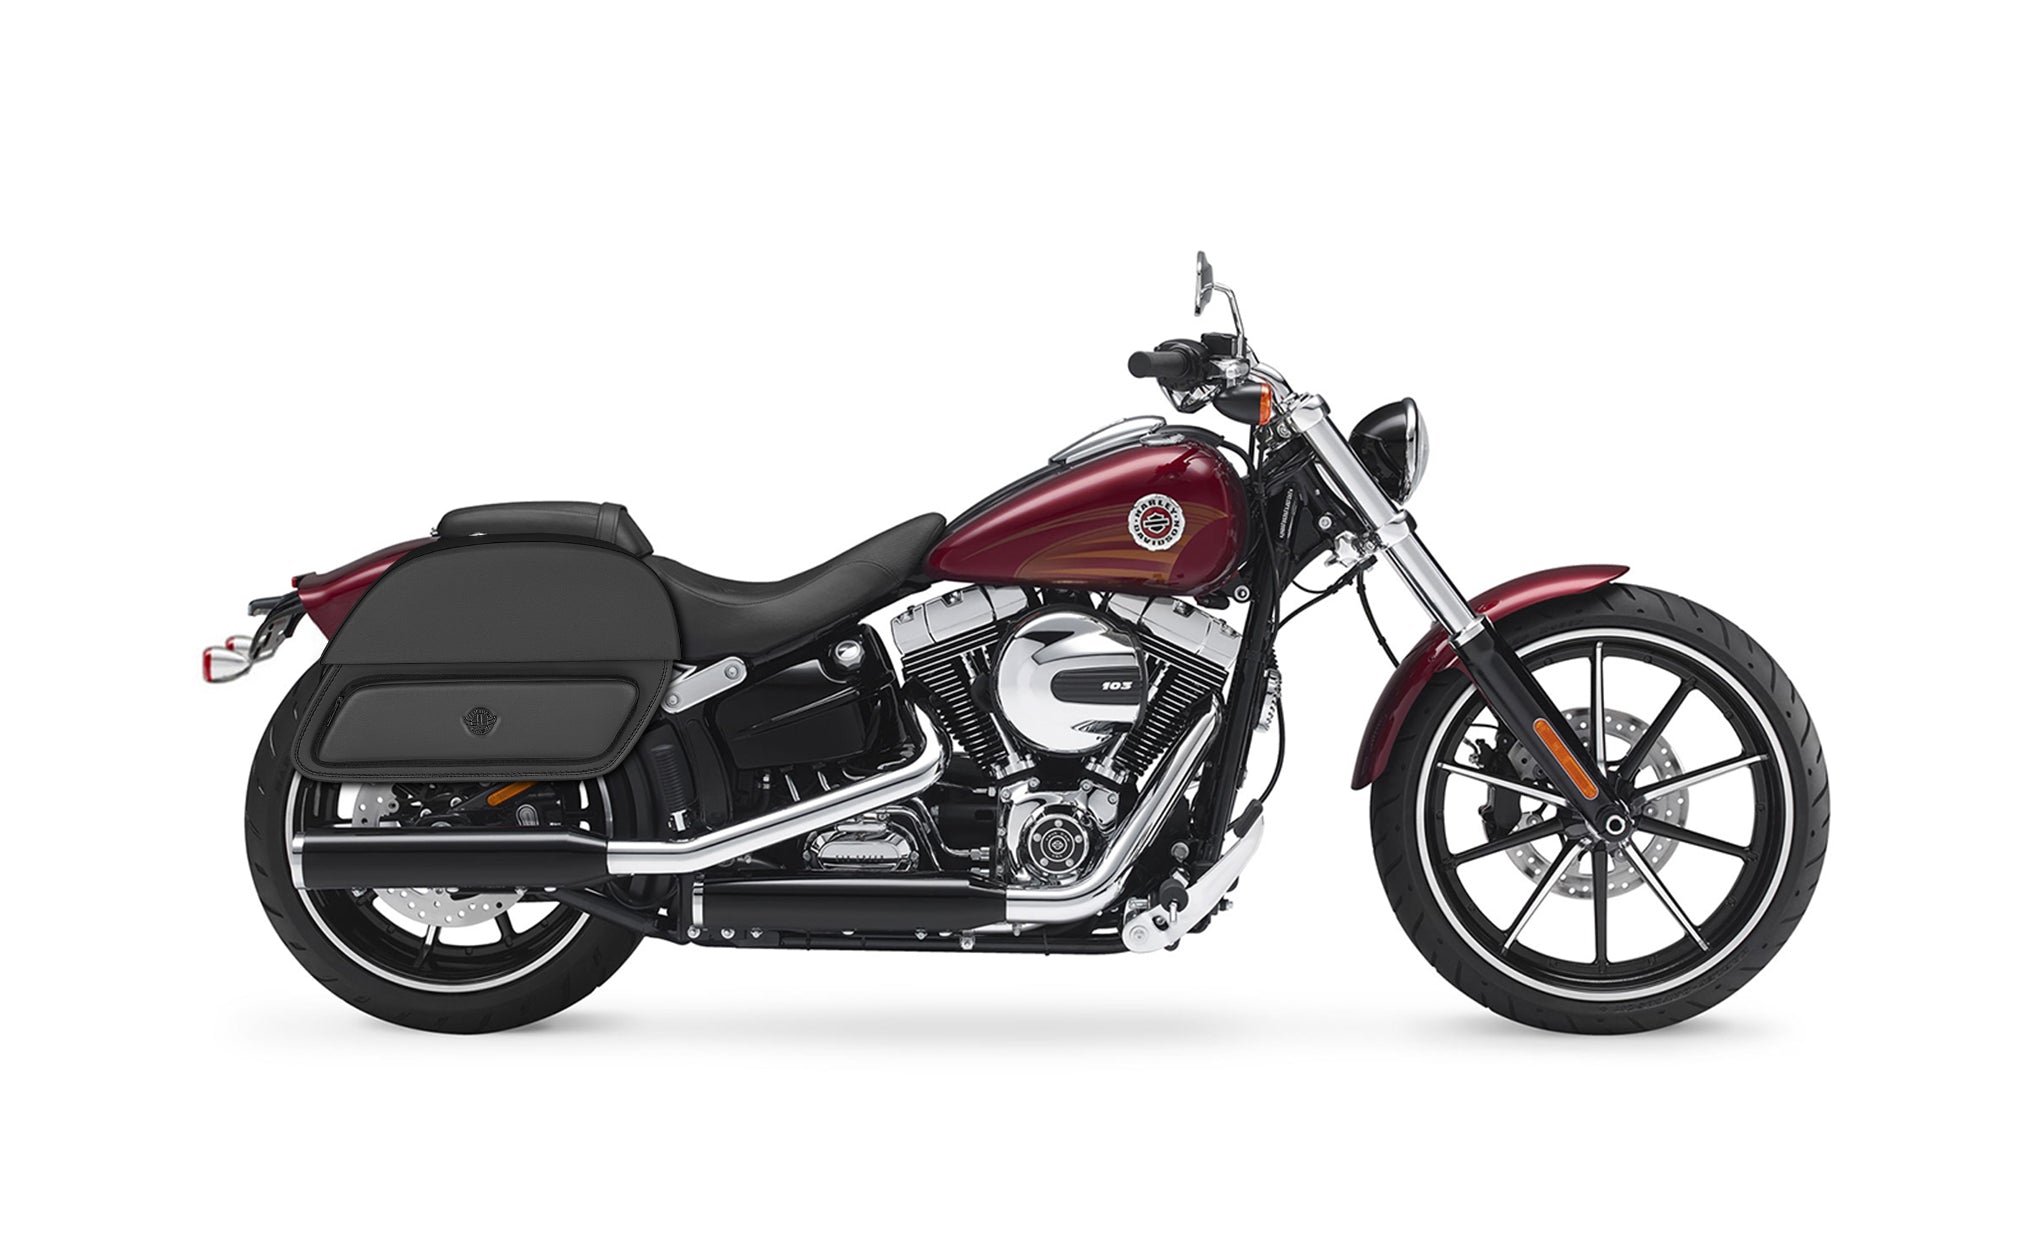 28L - Pantheon Medium Motorcycle Saddlebags for Harley Softail Breakout FXSB on Bike Photo @expand